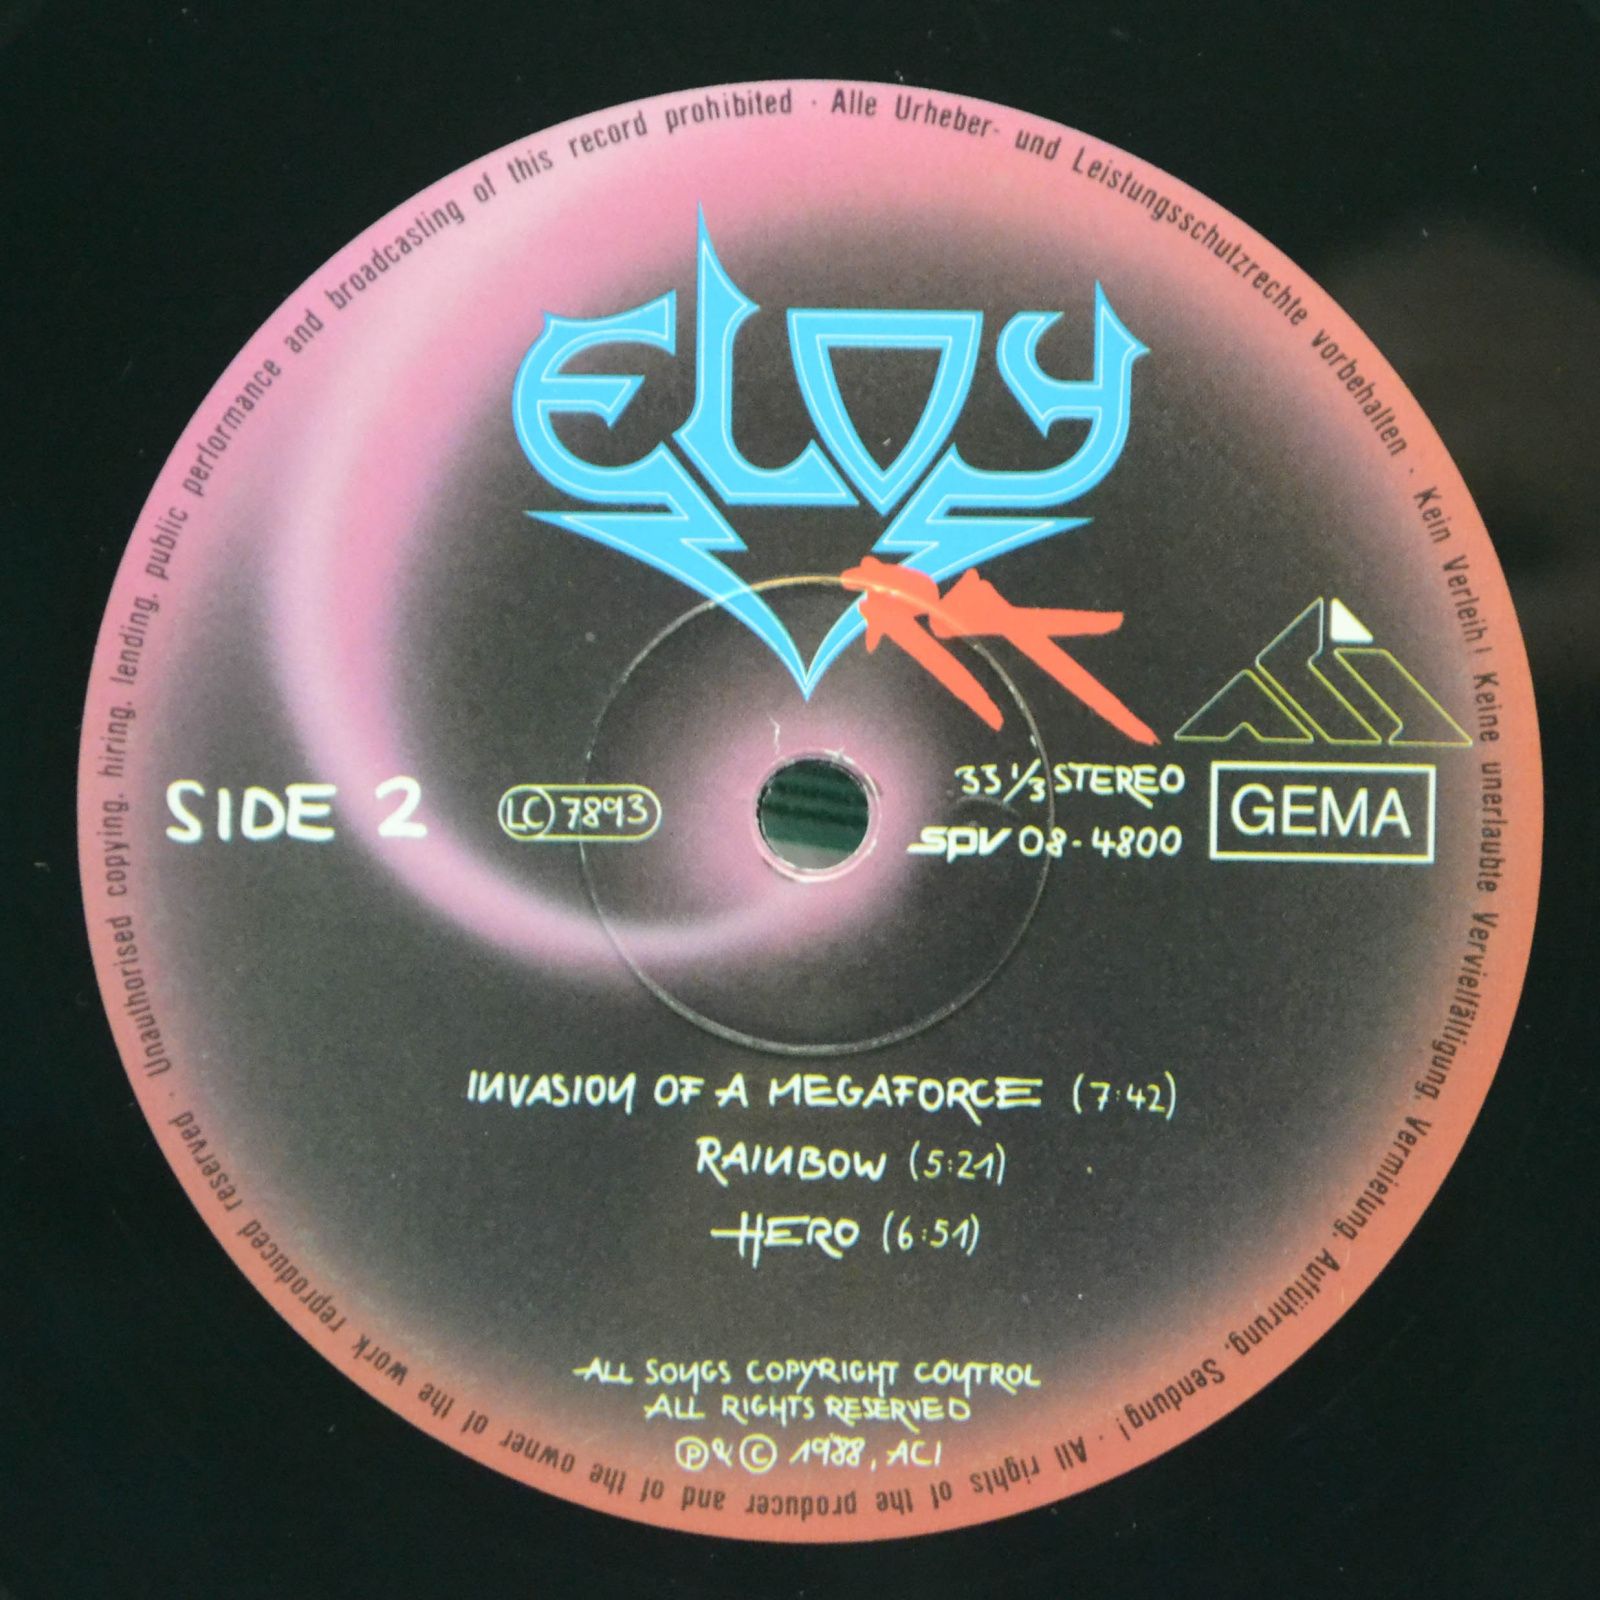 Eloy — Ra (1-st, Germany), 1988